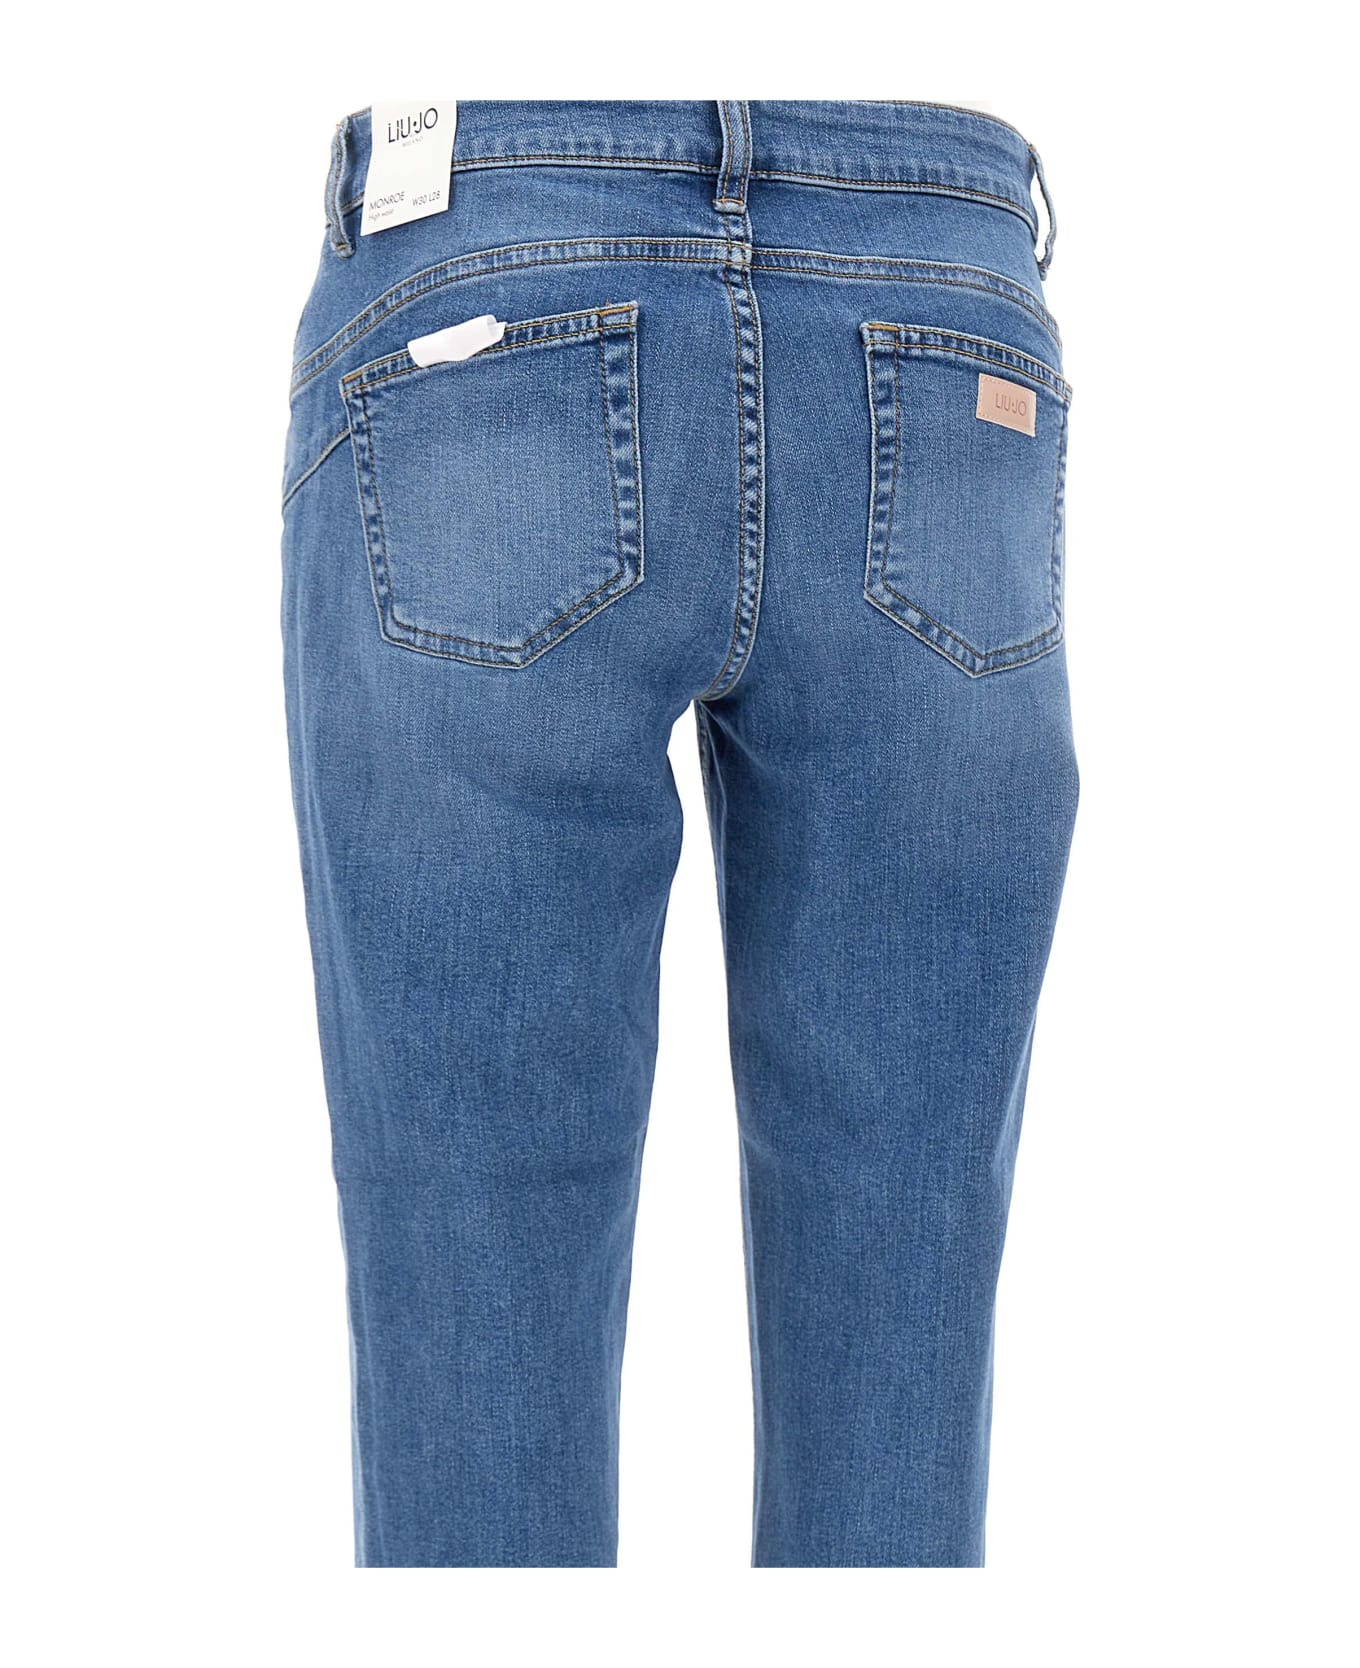 Liu-Jo "monroe" Cotton Jeans - BLUE デニム